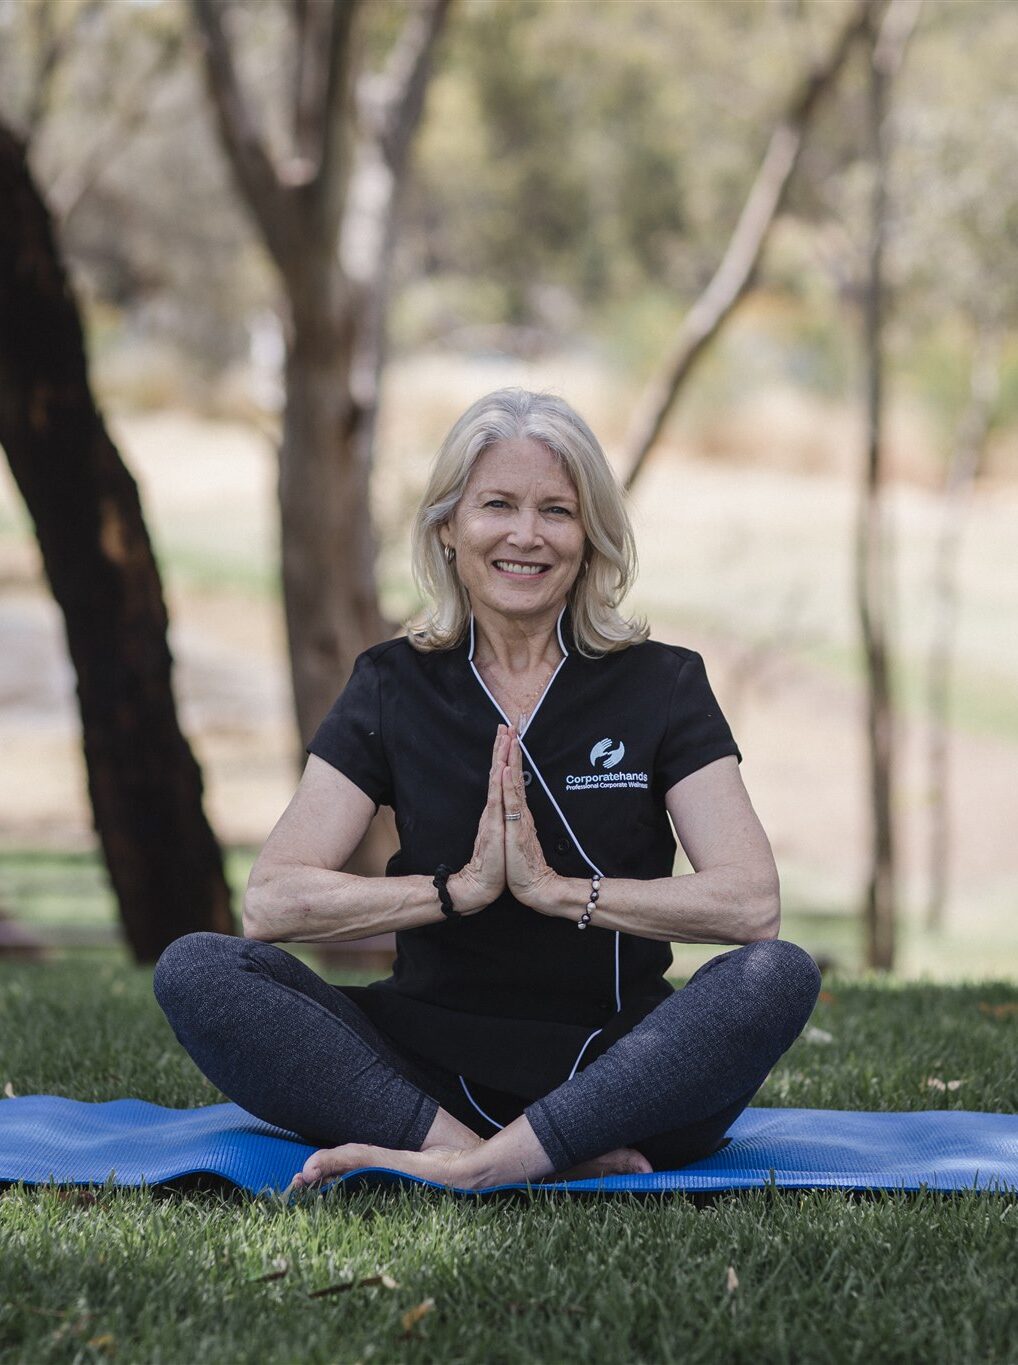 Corporate Meditation and Yoga